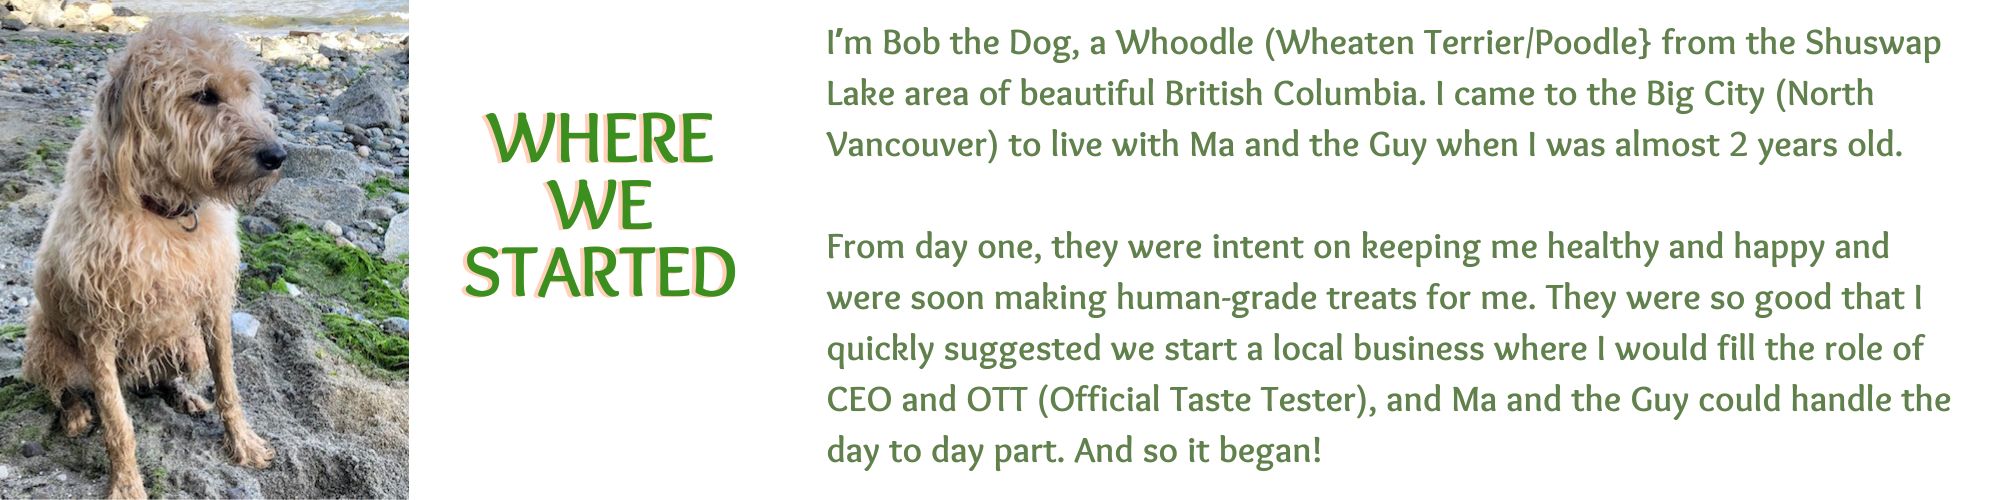 Bob the Dog - Where We Started